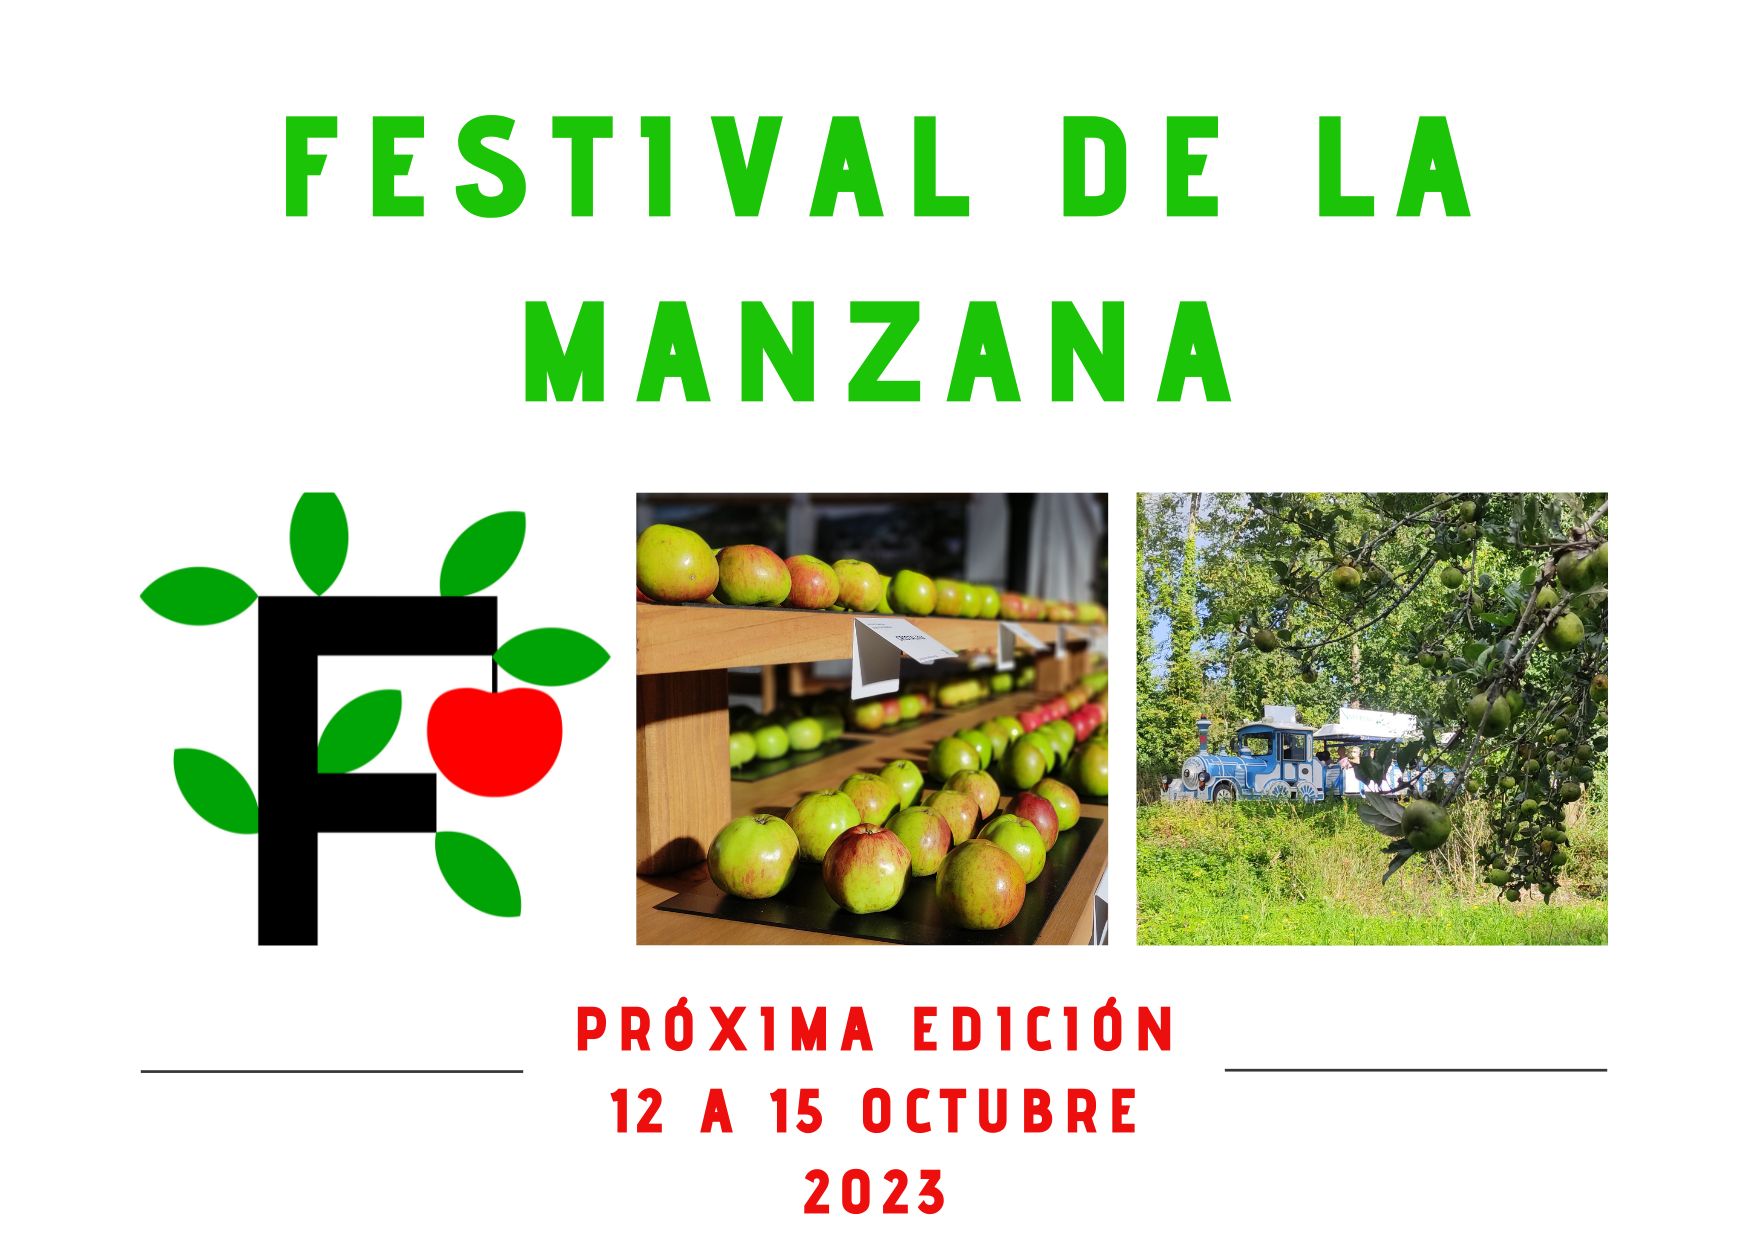 IMAGEN AVANCE FESTIVAL DE LA MANZANA 2023